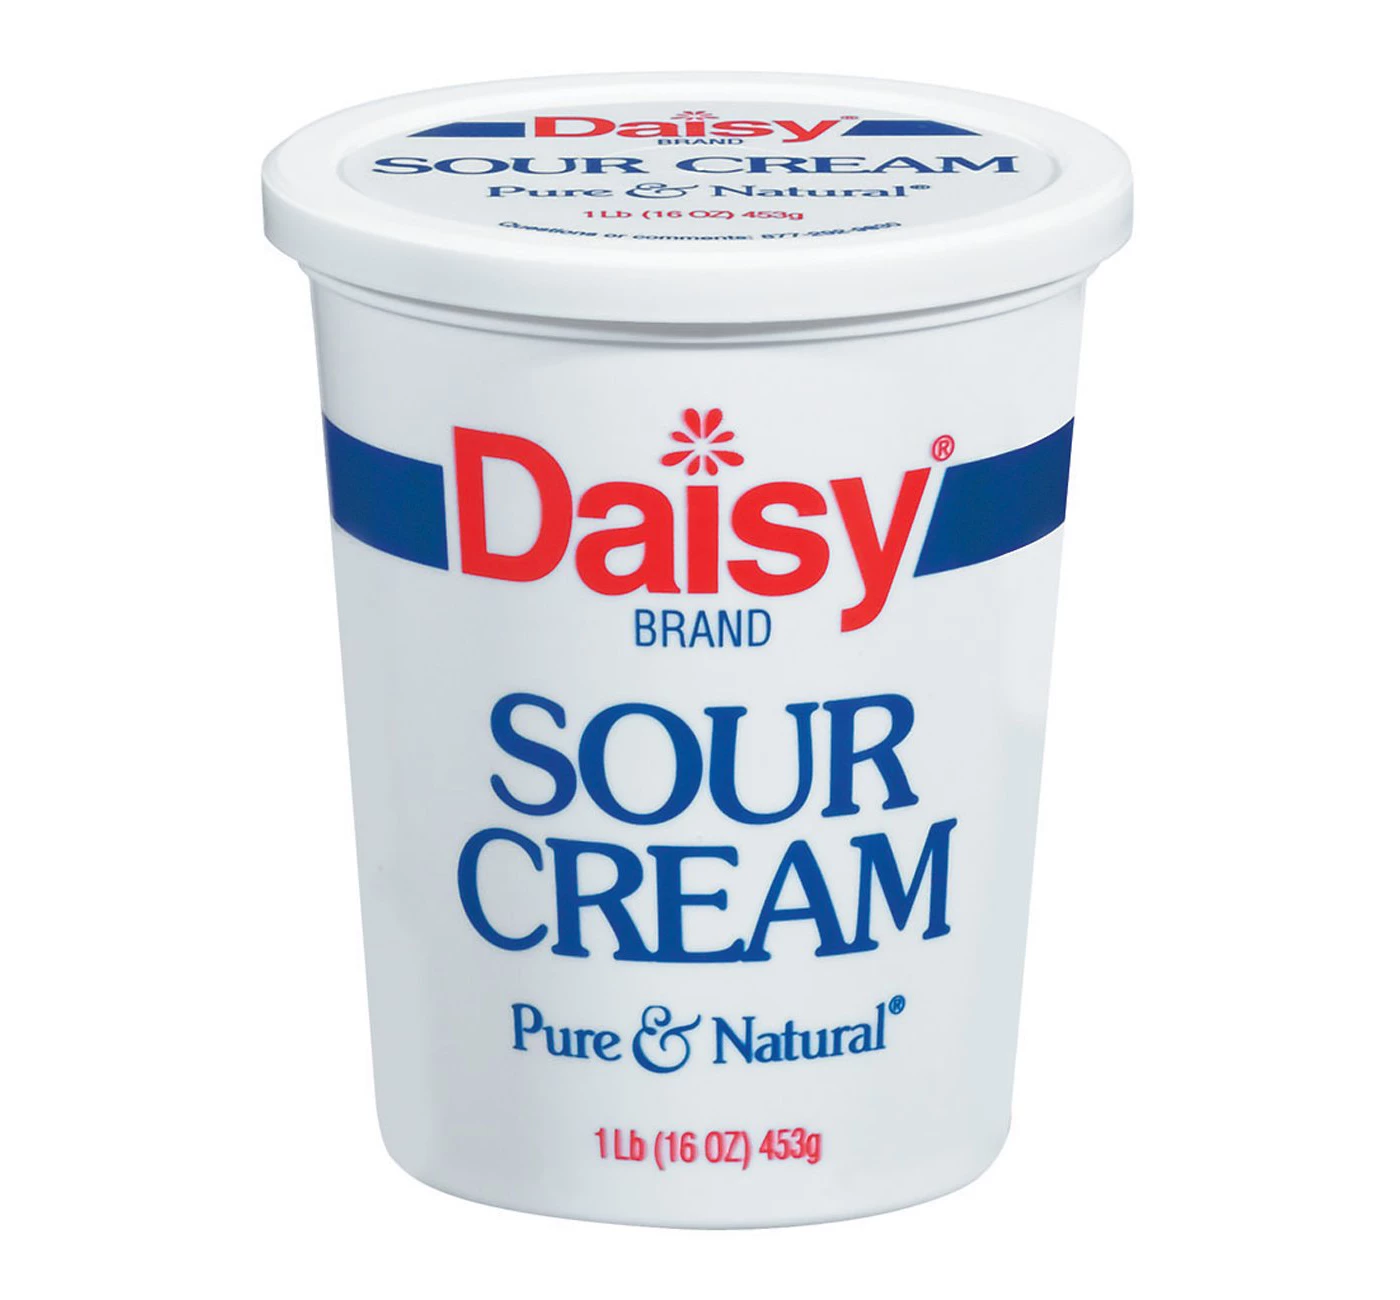 Daisy Pure & Natural Sour Cream - 16oz - image 1 of 4